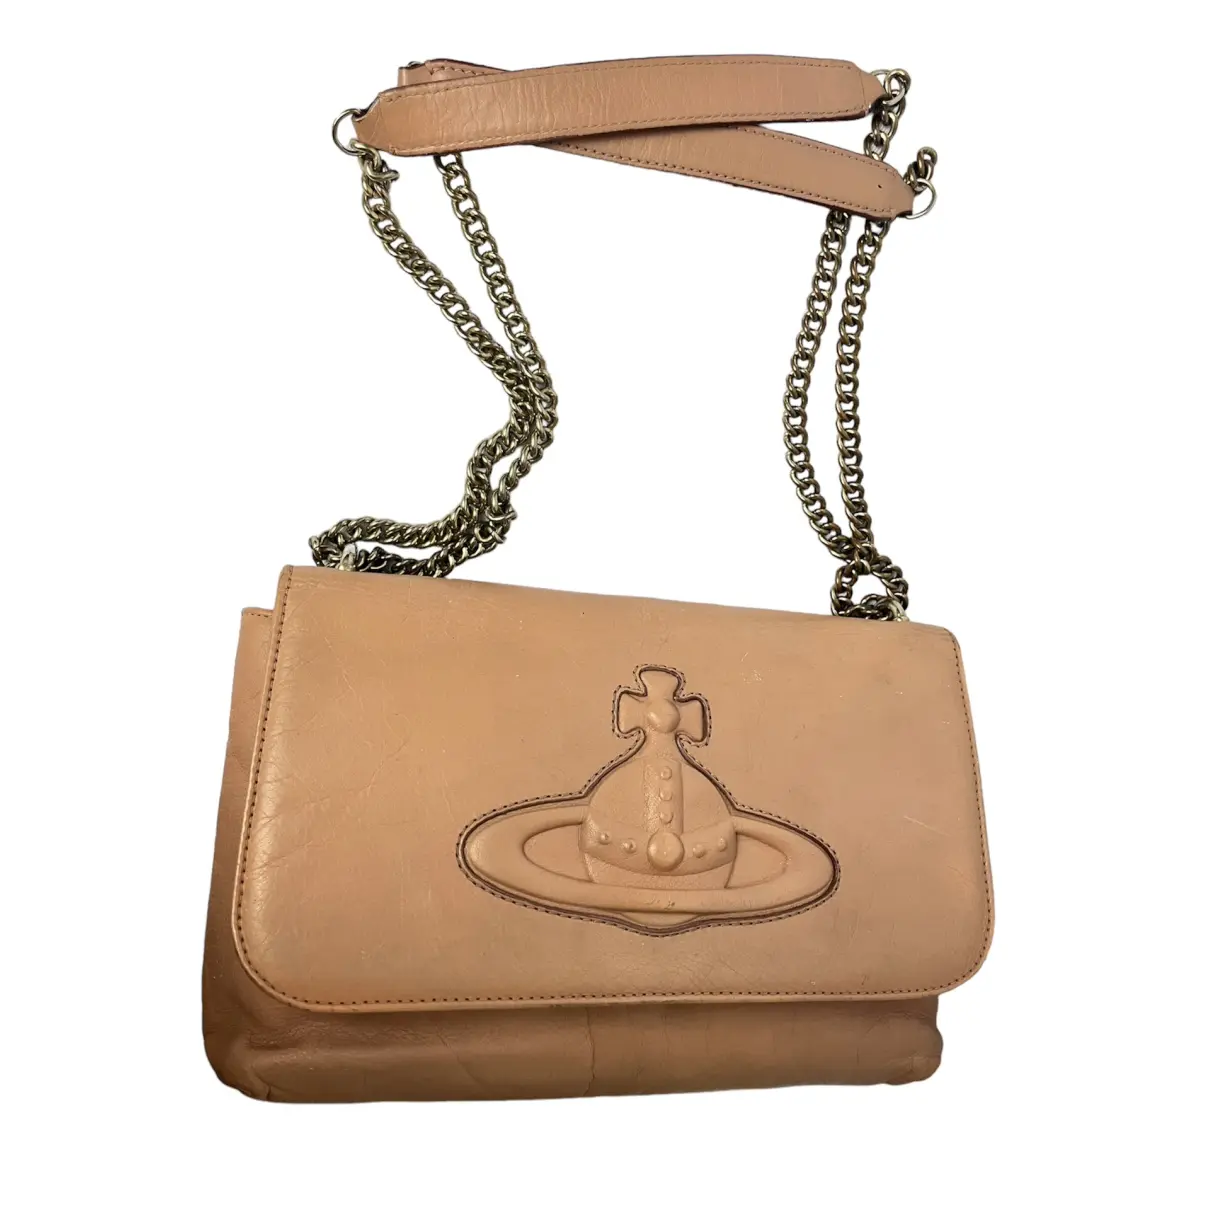 Chancery Heart leather handbag